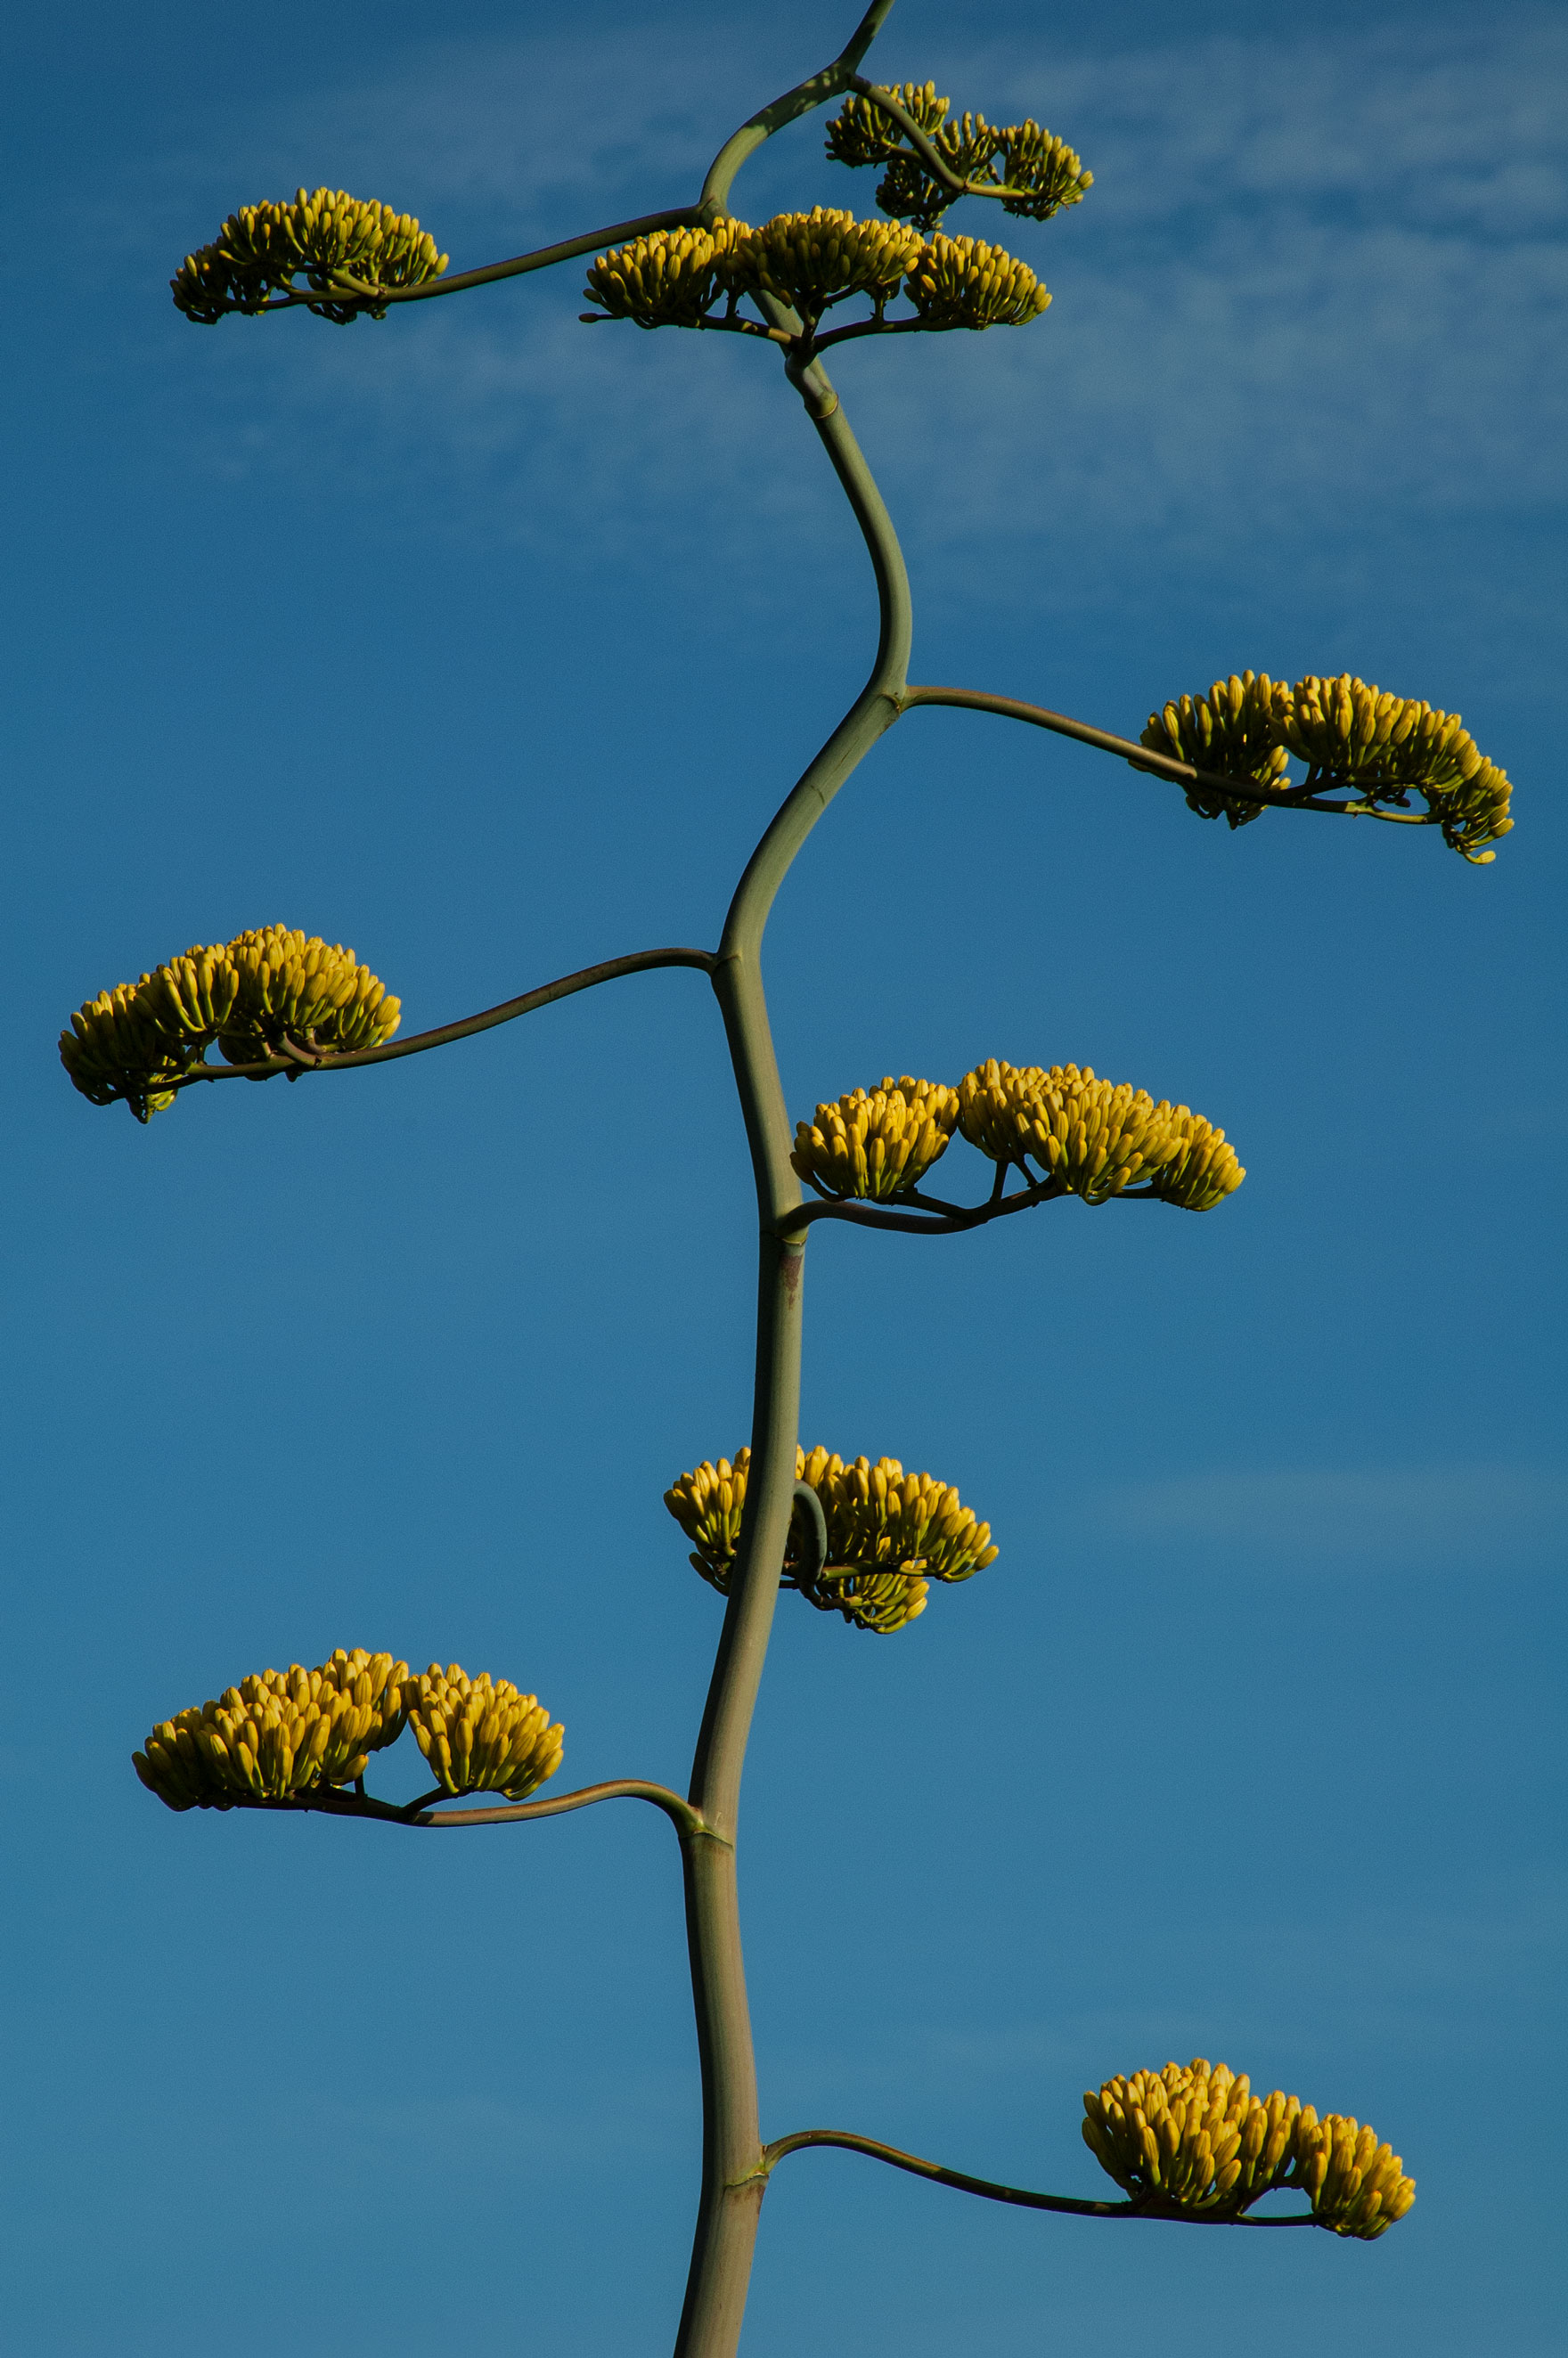 Century plant (Agave chrysantha) atop Mt. Ord in the Mazatzal Mts., Arizona